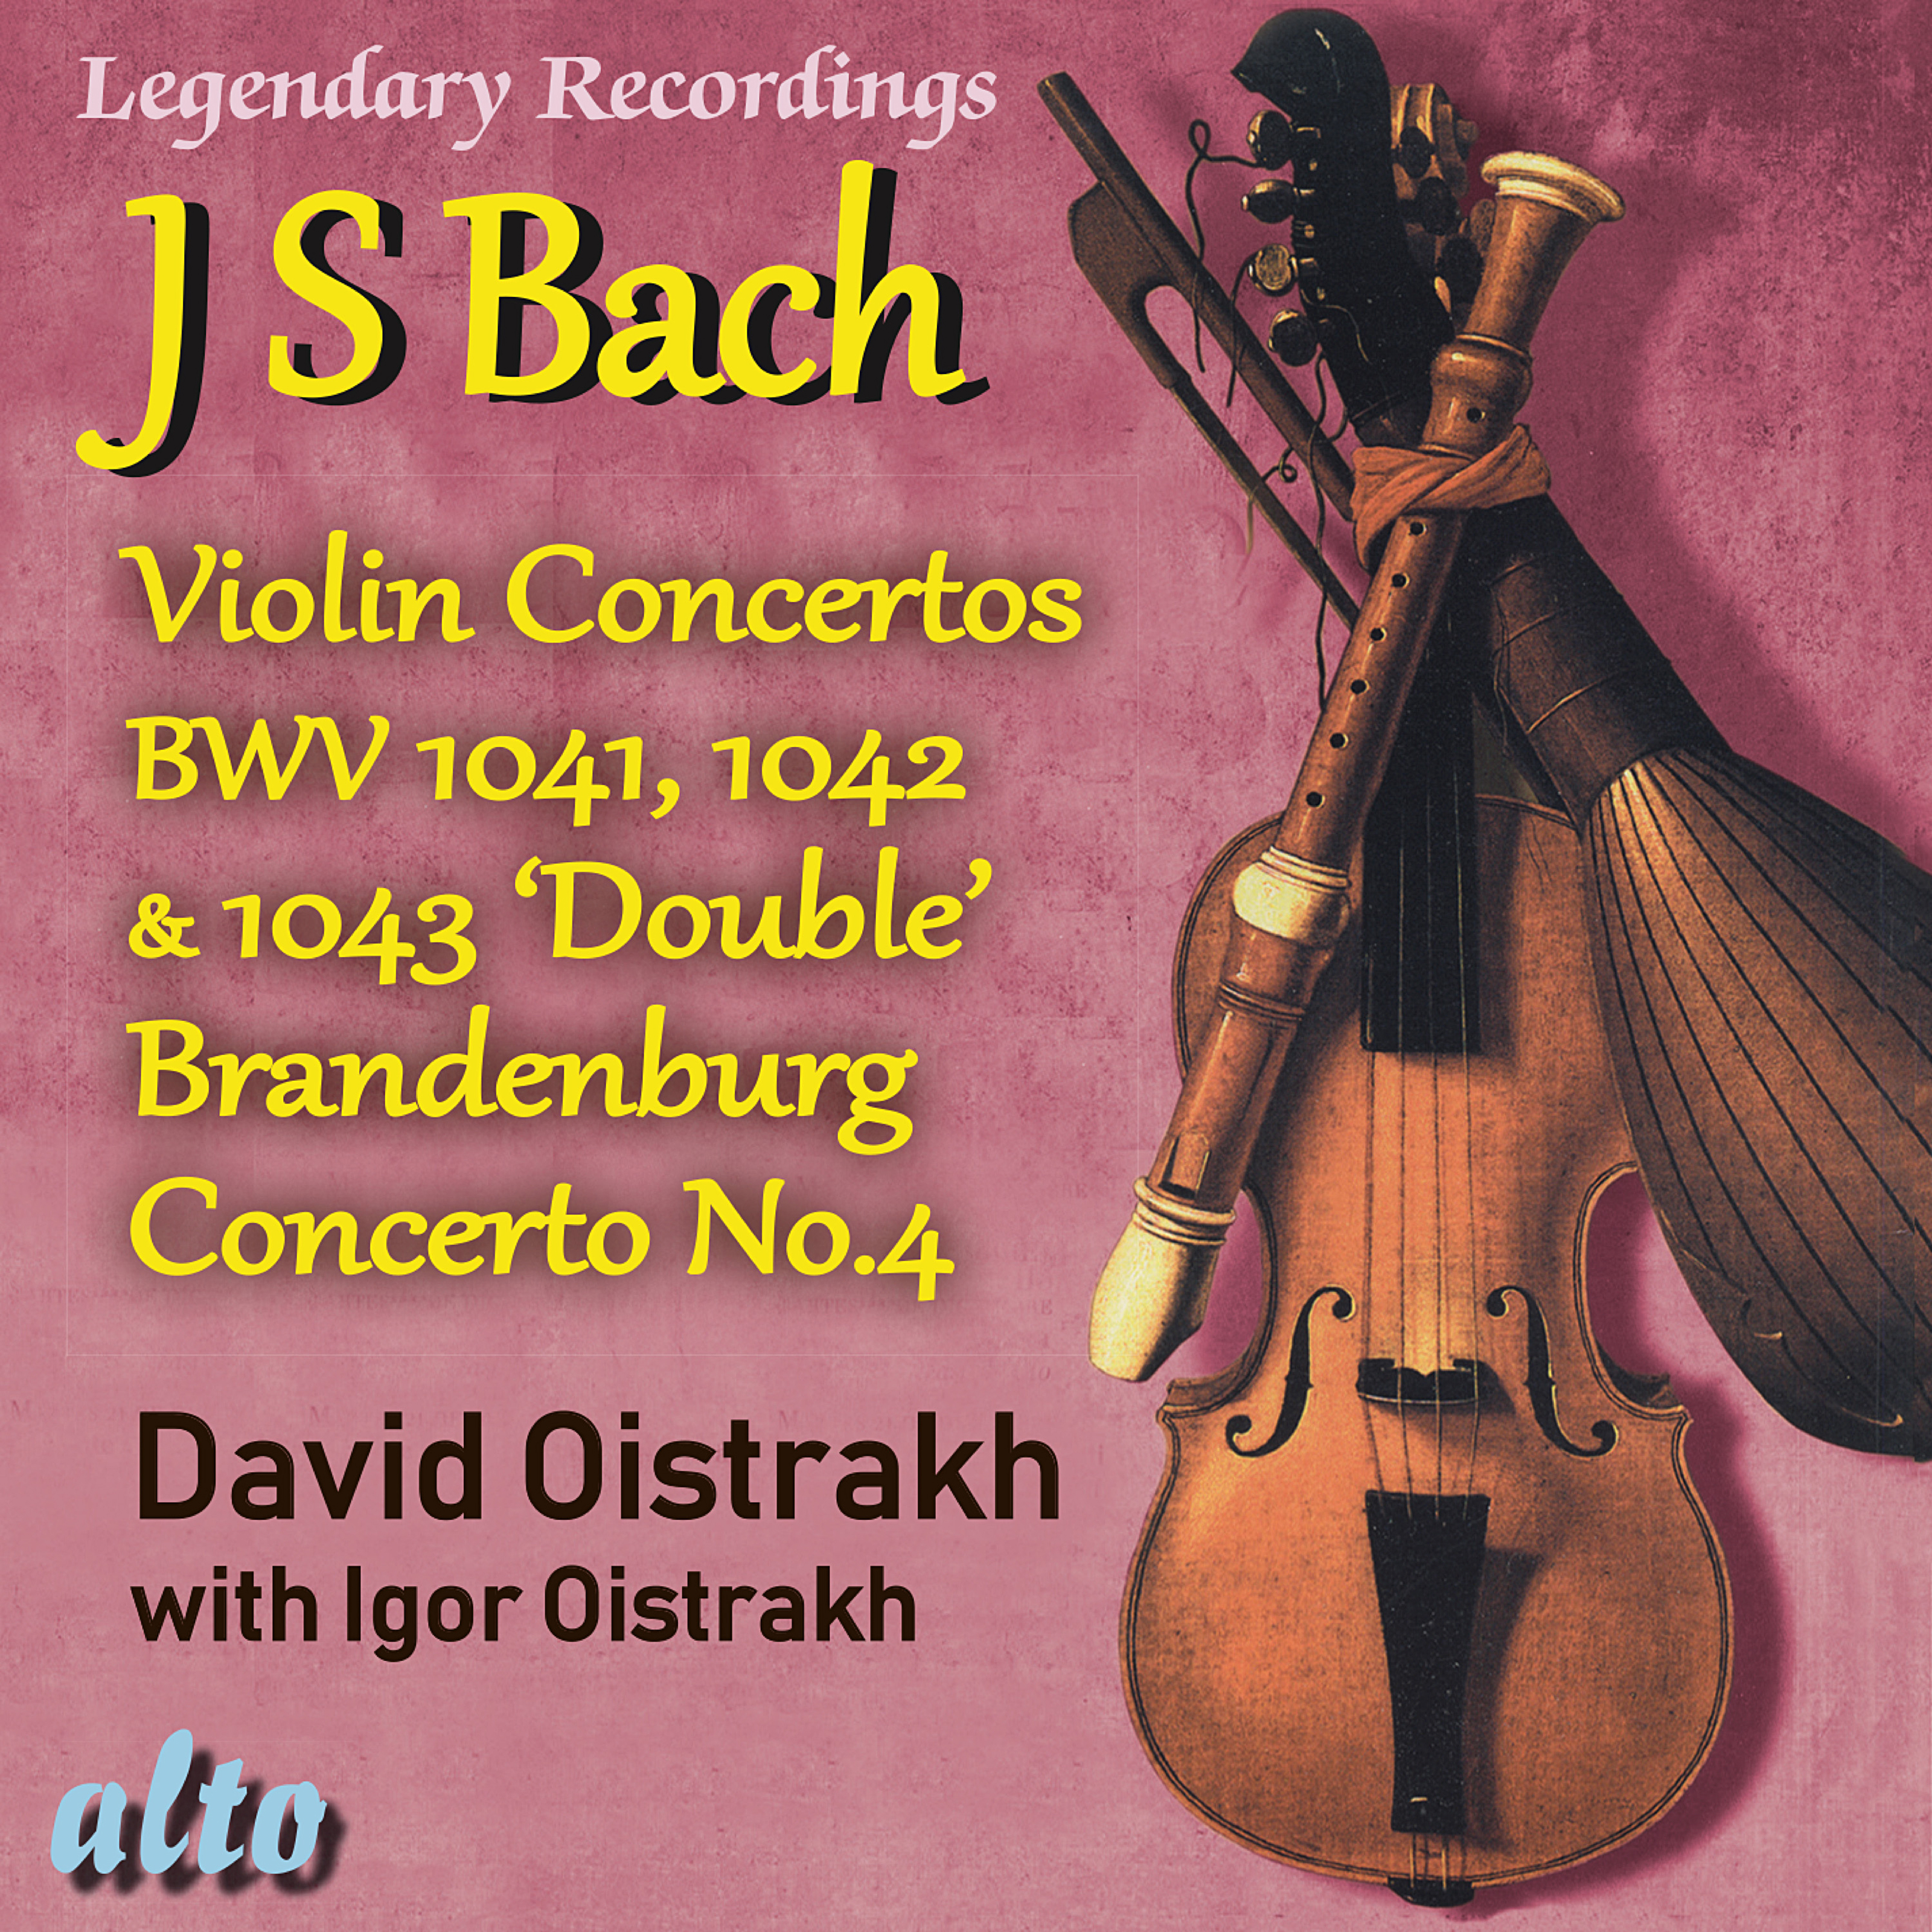 Bach: Violin Concertos, BWV 1041, 1042 and 1043 - Brandenburg Concerto No. 4, BWV 1049 (1957, 1962)